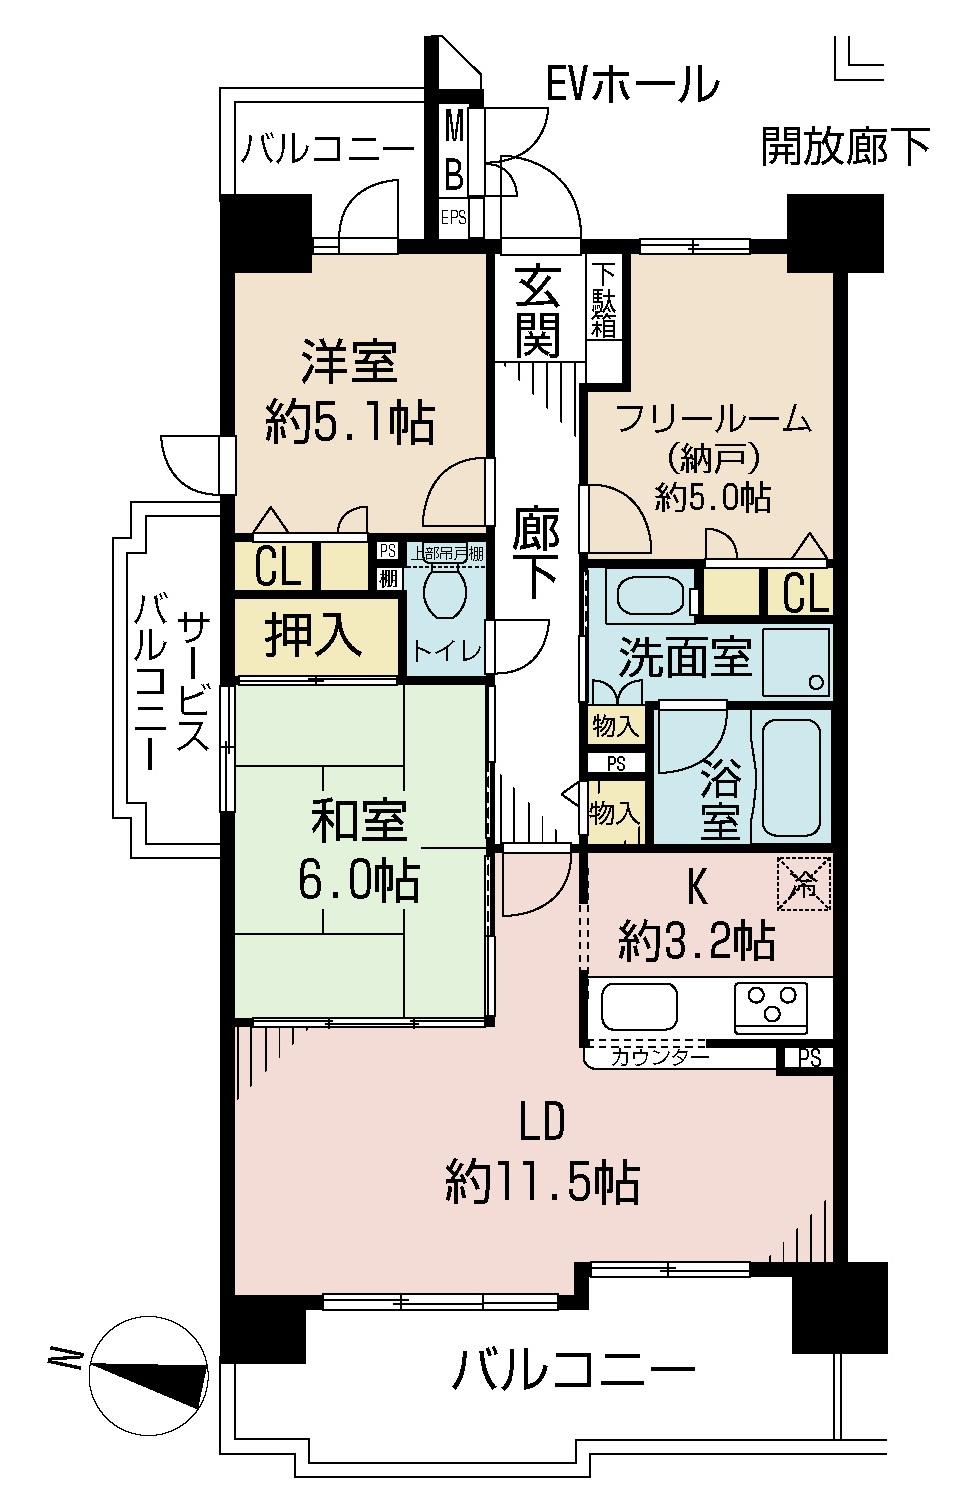 Floor plan. 2LDK + S (storeroom), Price 28.8 million yen, Footprint 68.9 sq m , Balcony area 14.54 sq m